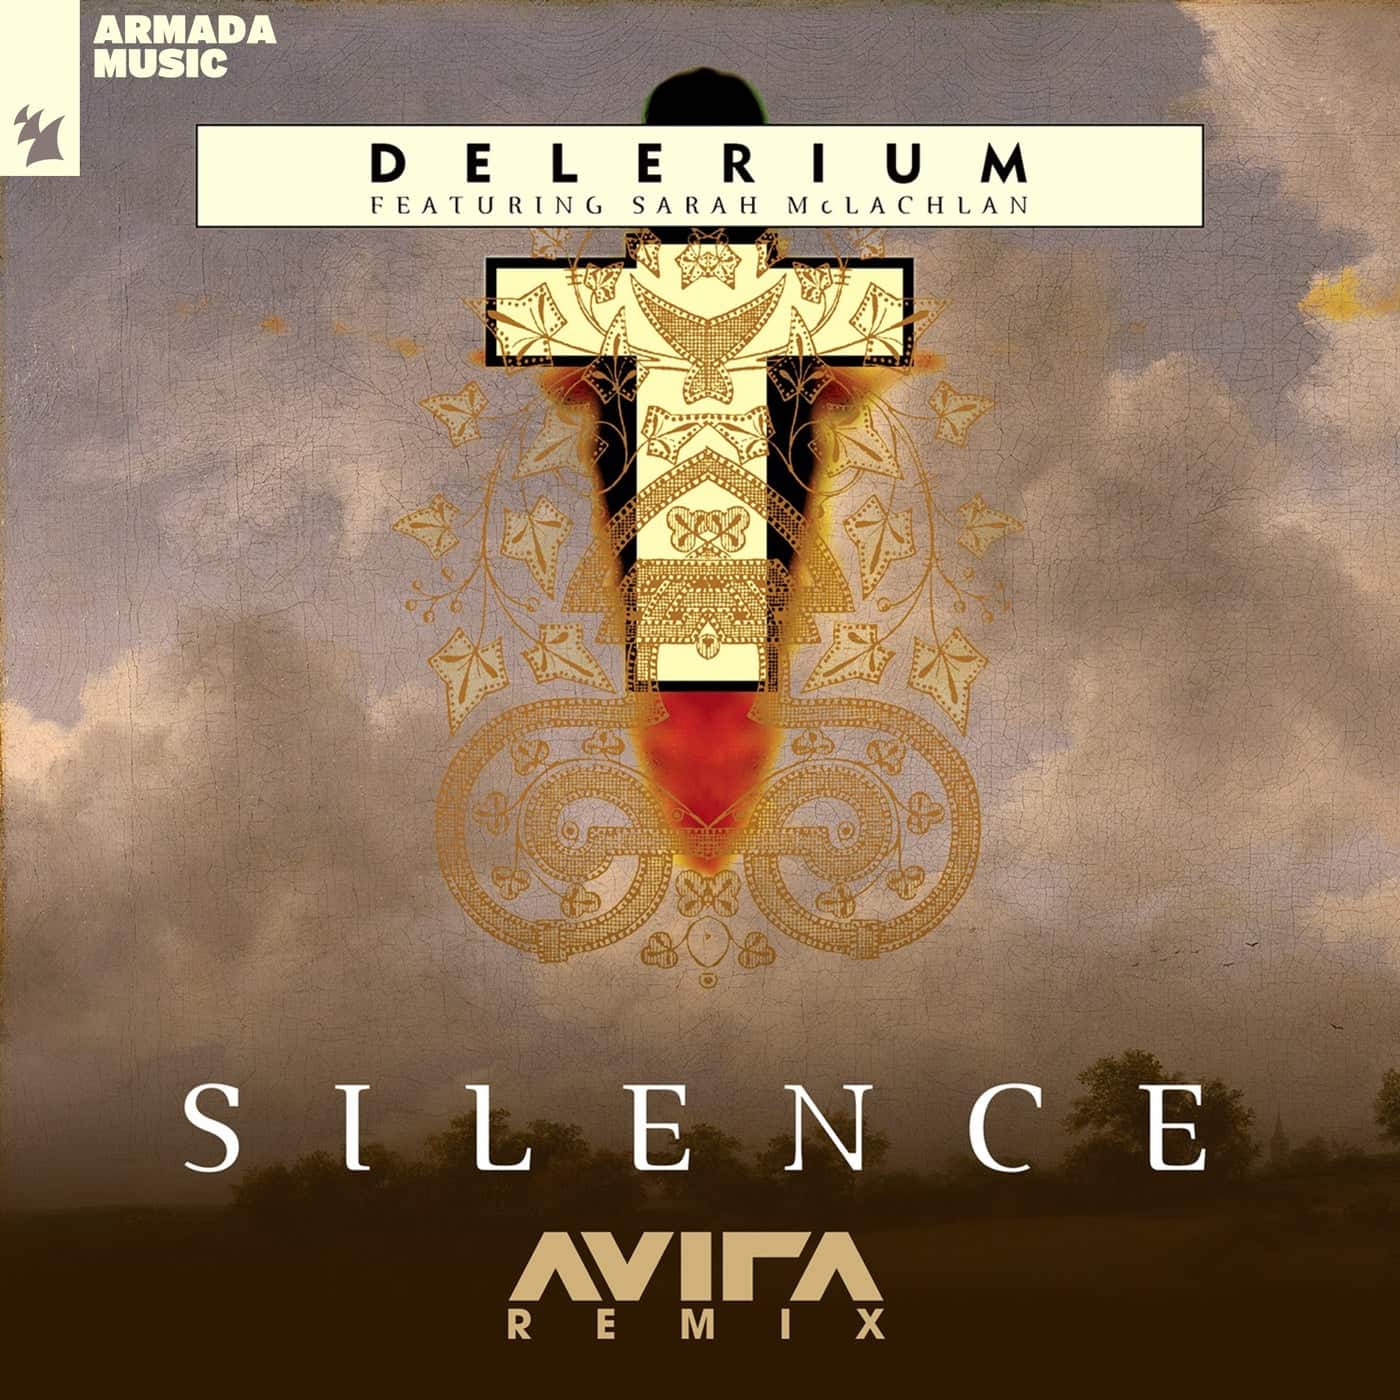 Download Silence - AVIRA Remix on Electrobuzz